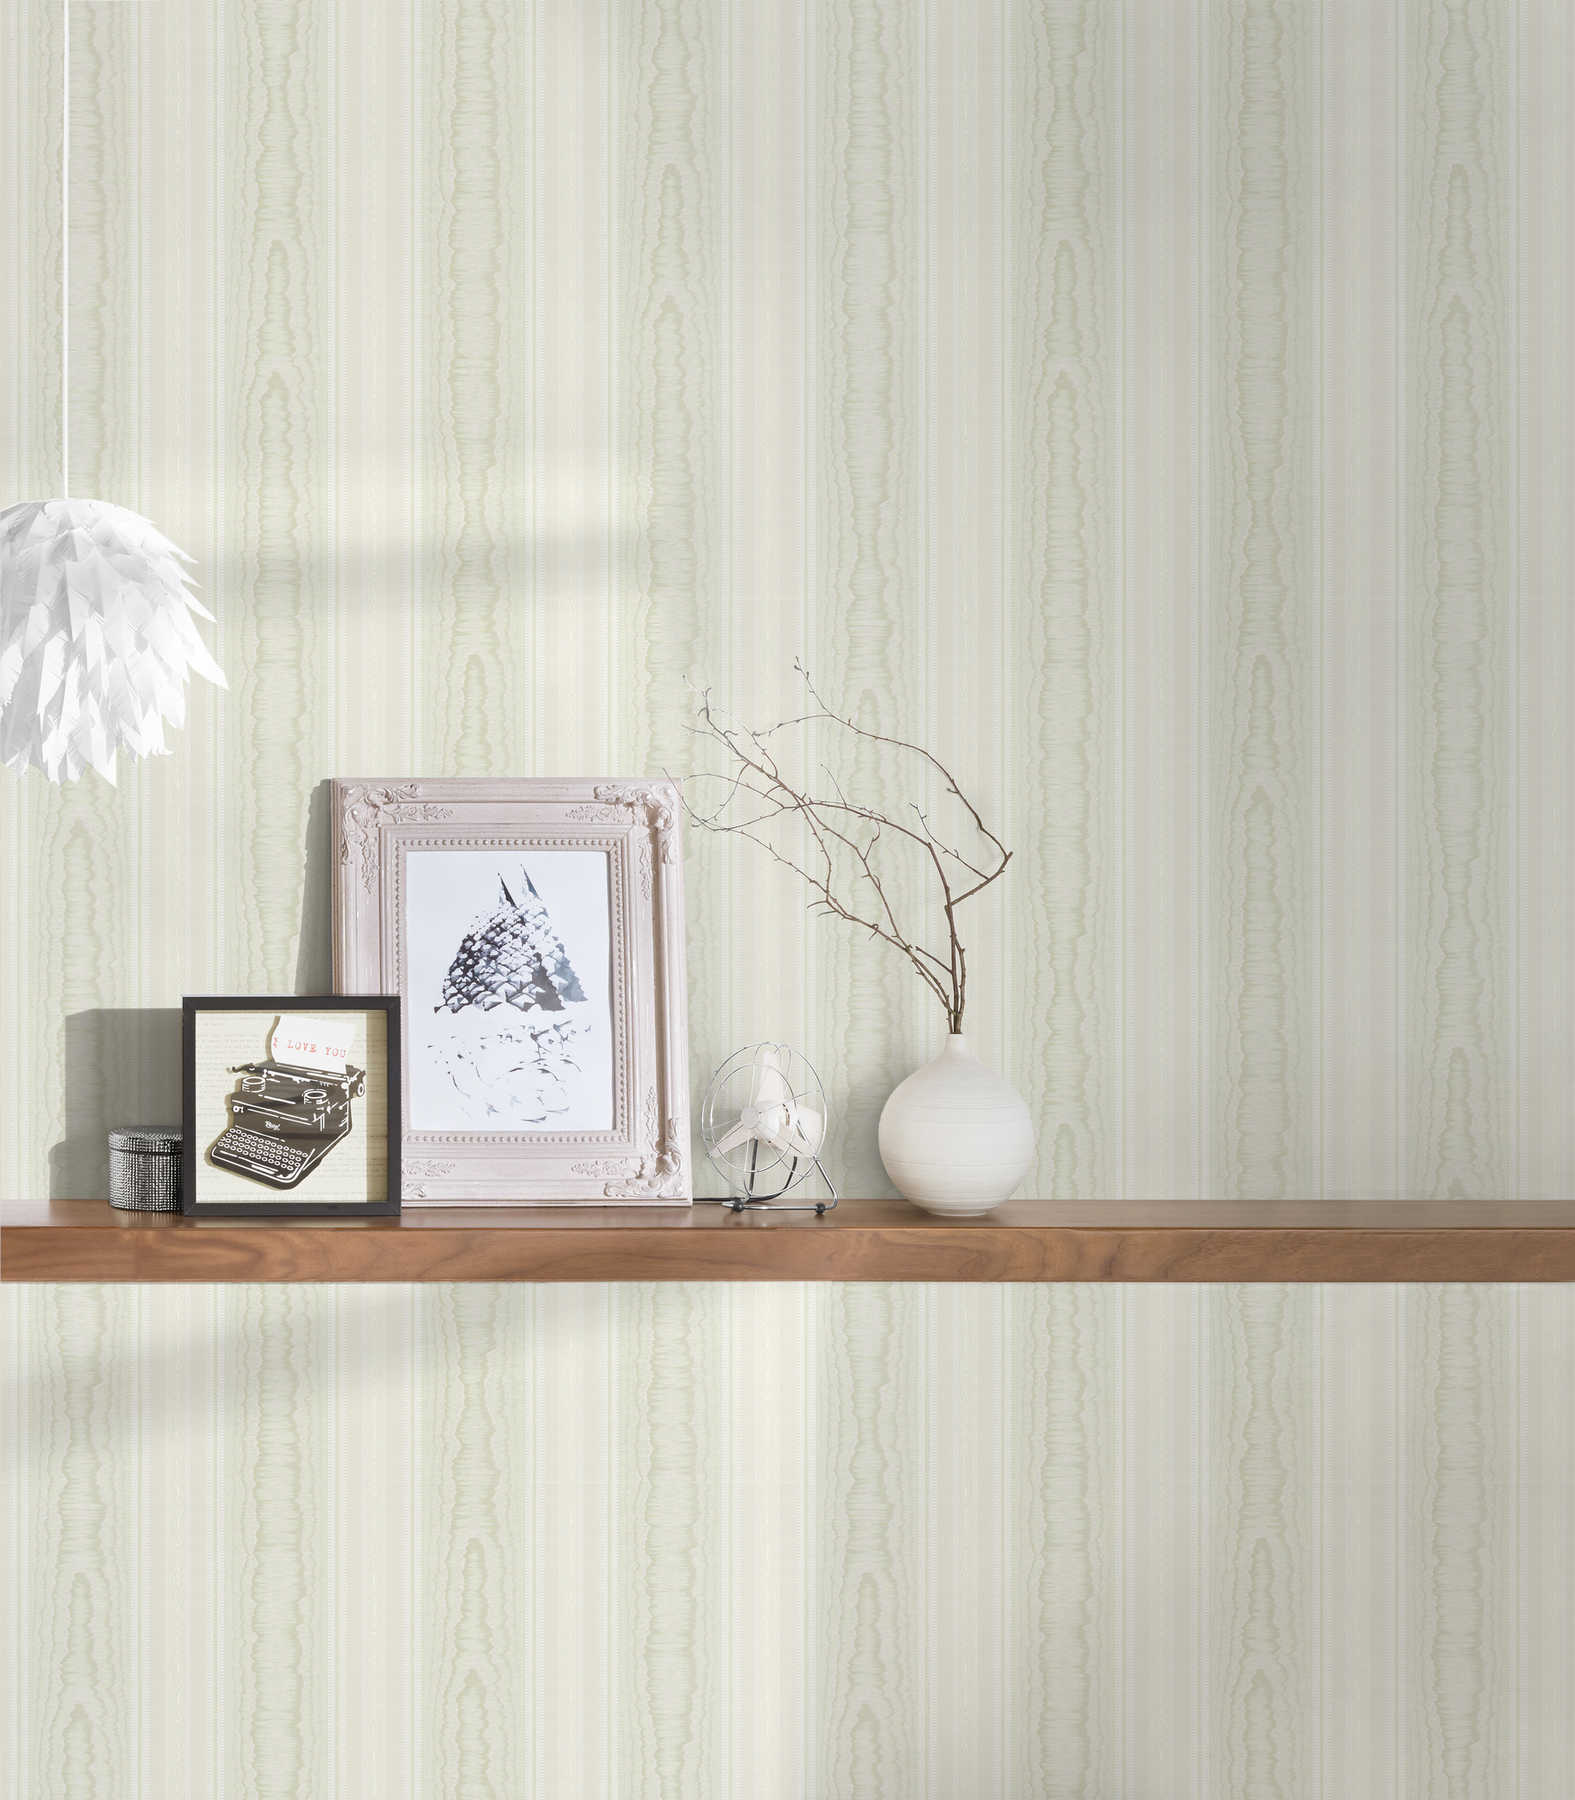             Luxury stripes wallpaper with moiré design - green, white
        